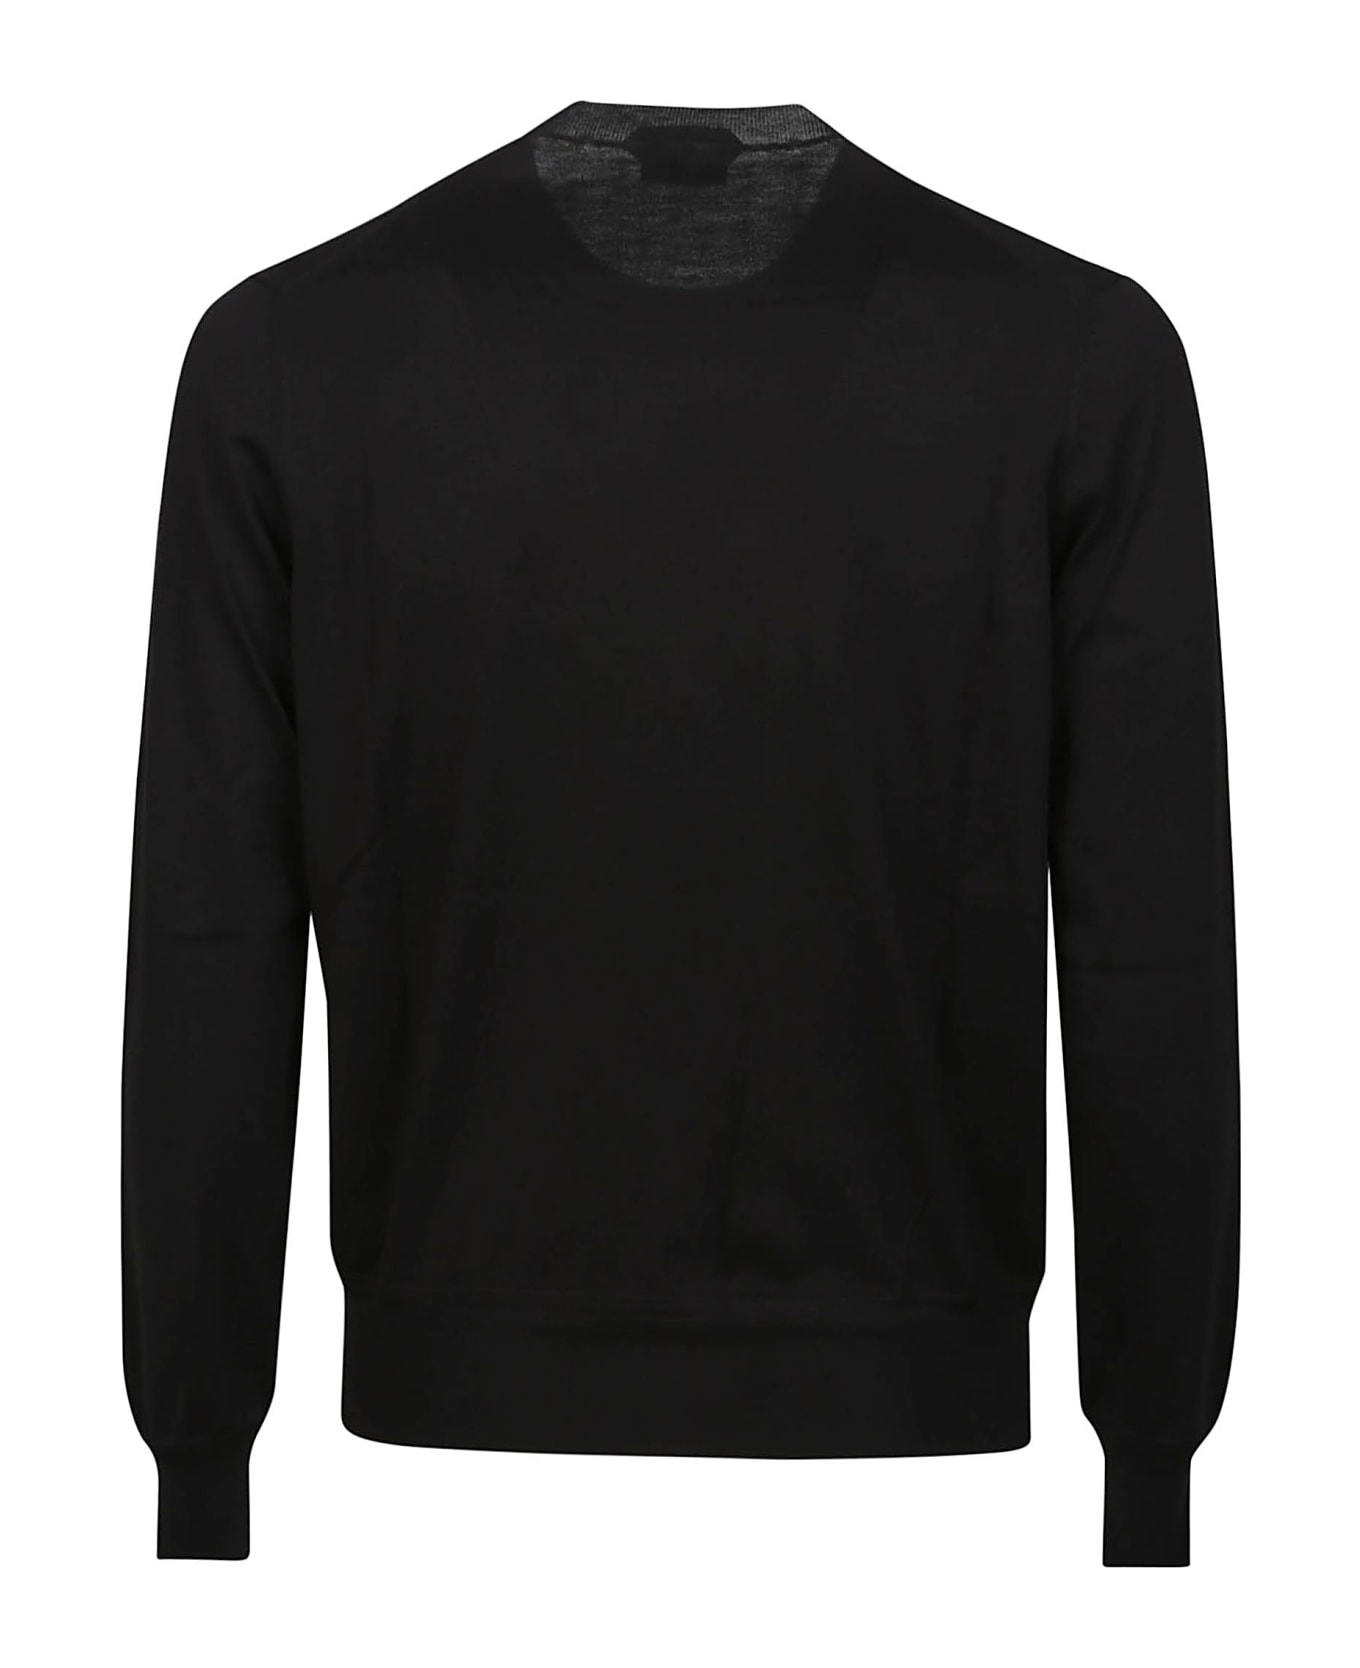 Tom Ford Long Sleeve Sweater - Black